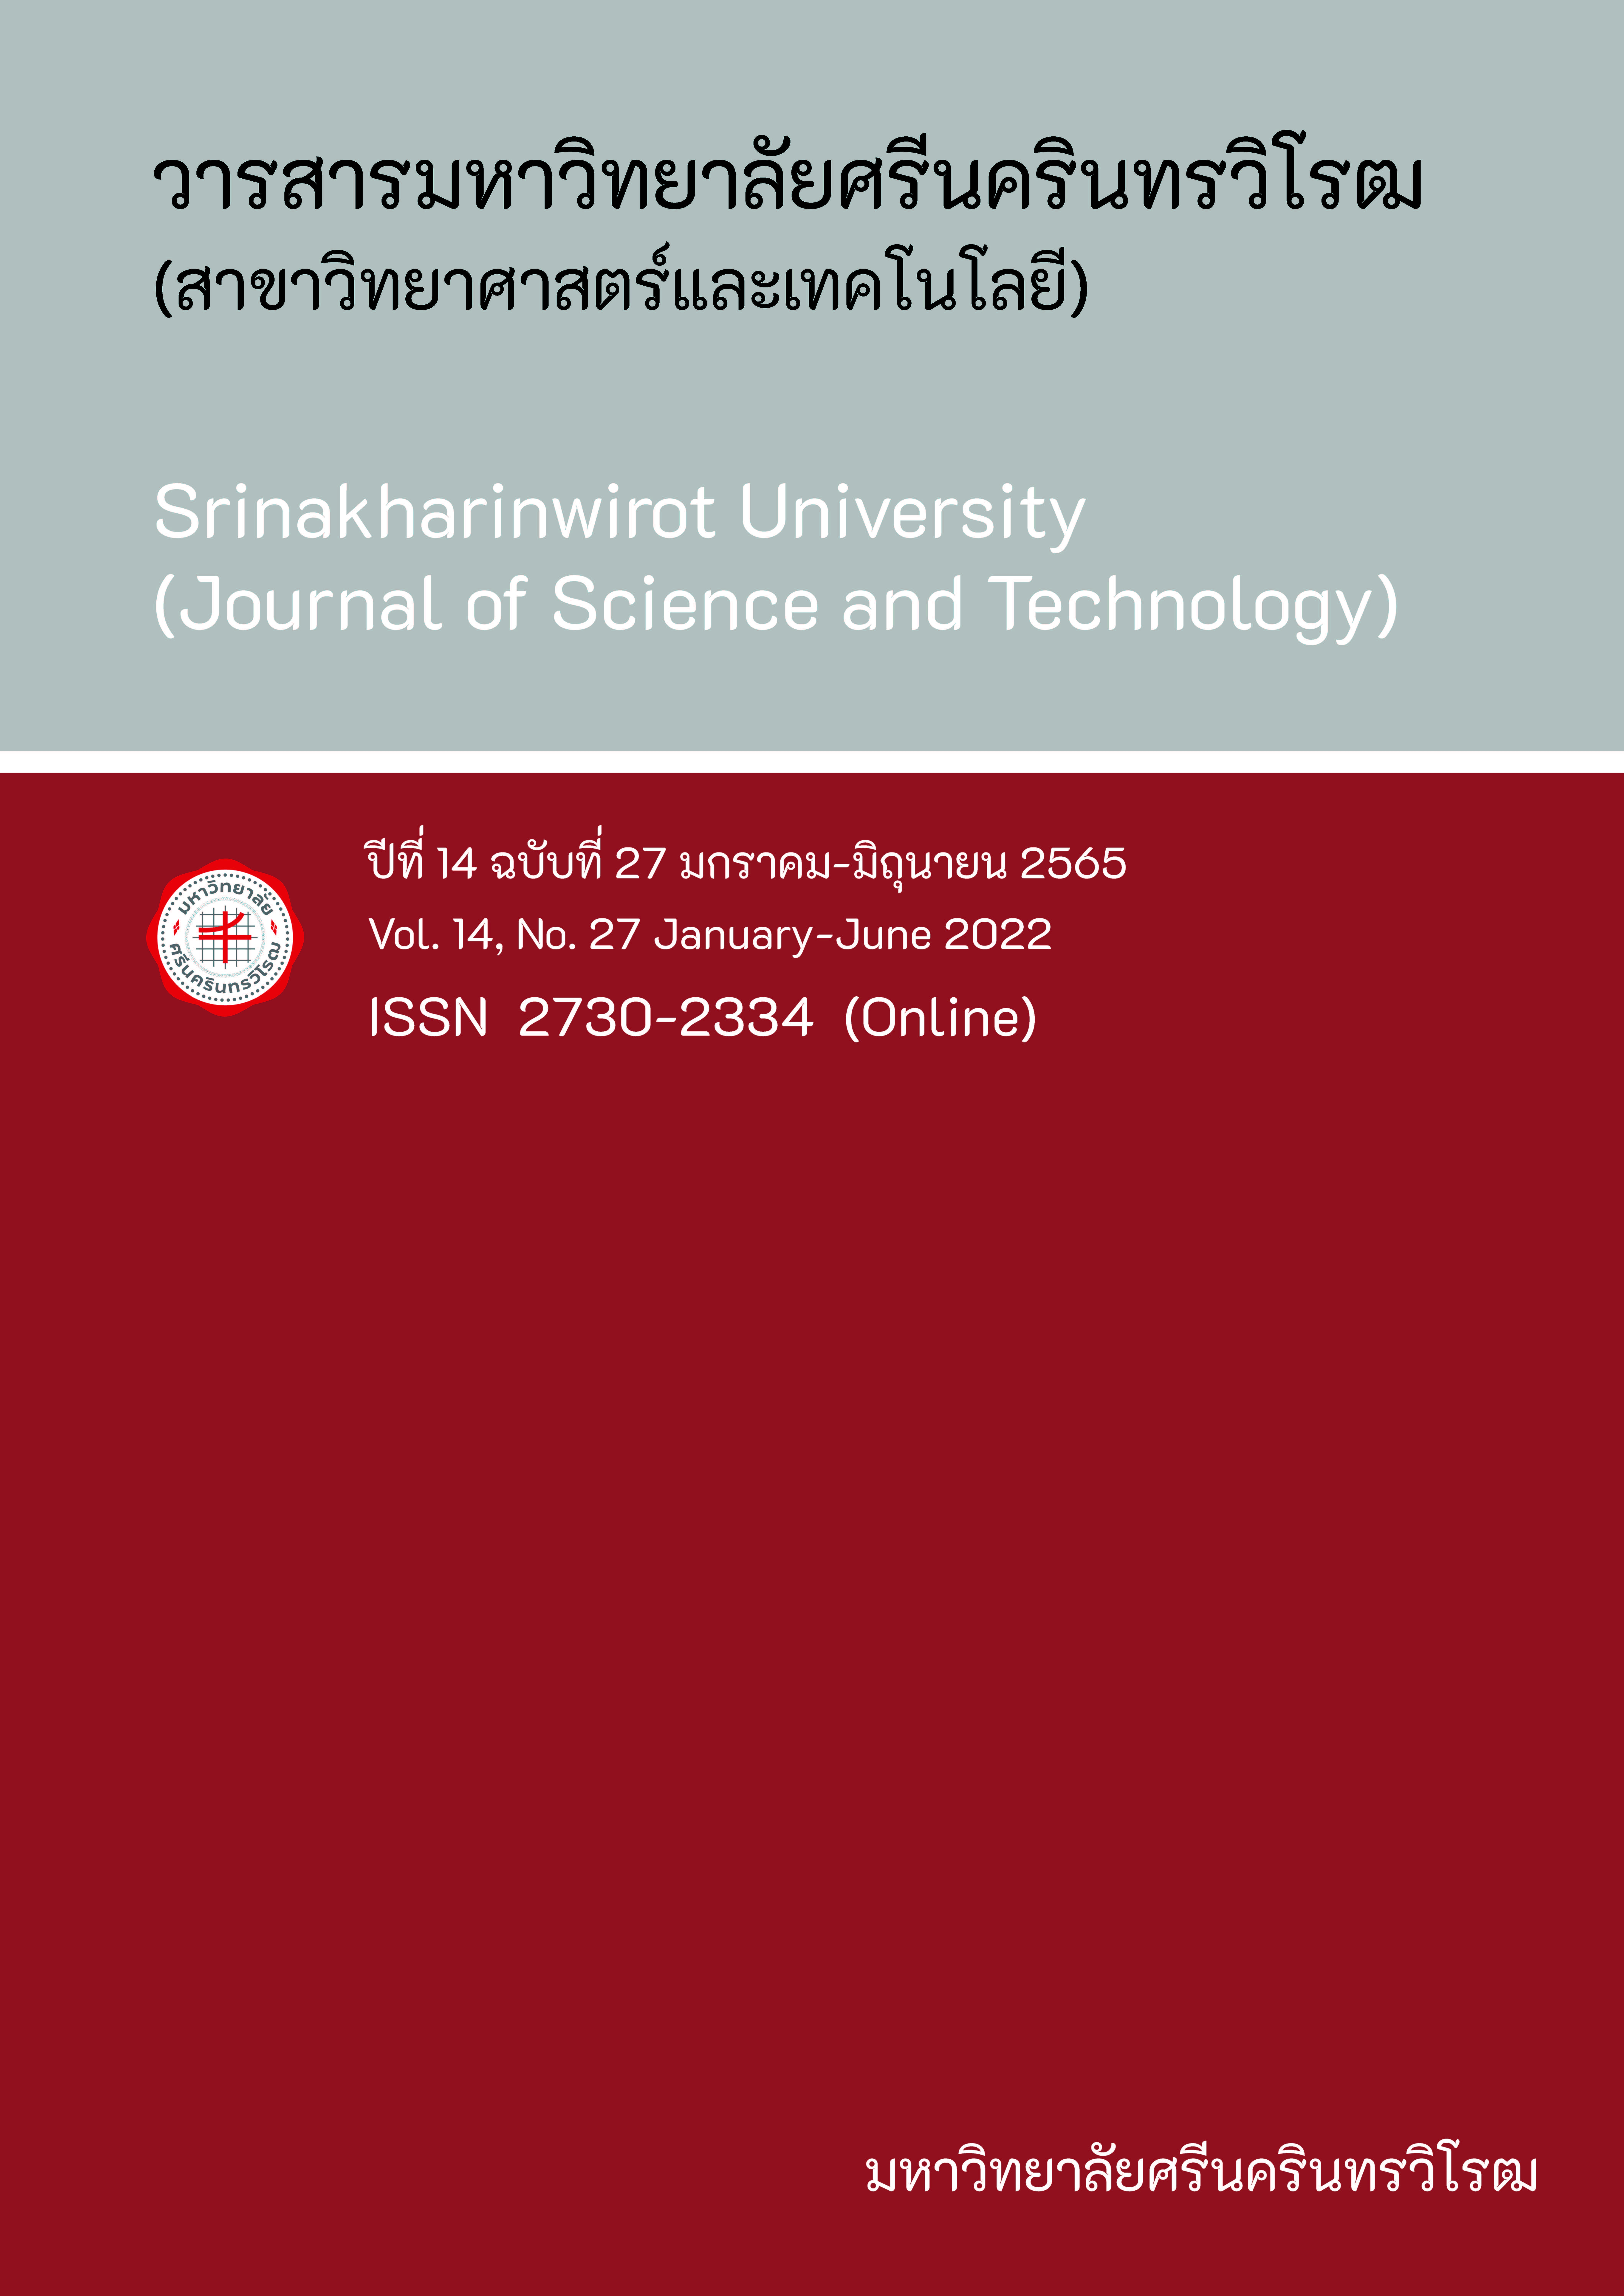 					View Vol. 14 No. 27, January-June (2022): Srinakharinwirot University (Journal of Science and Technology)
				